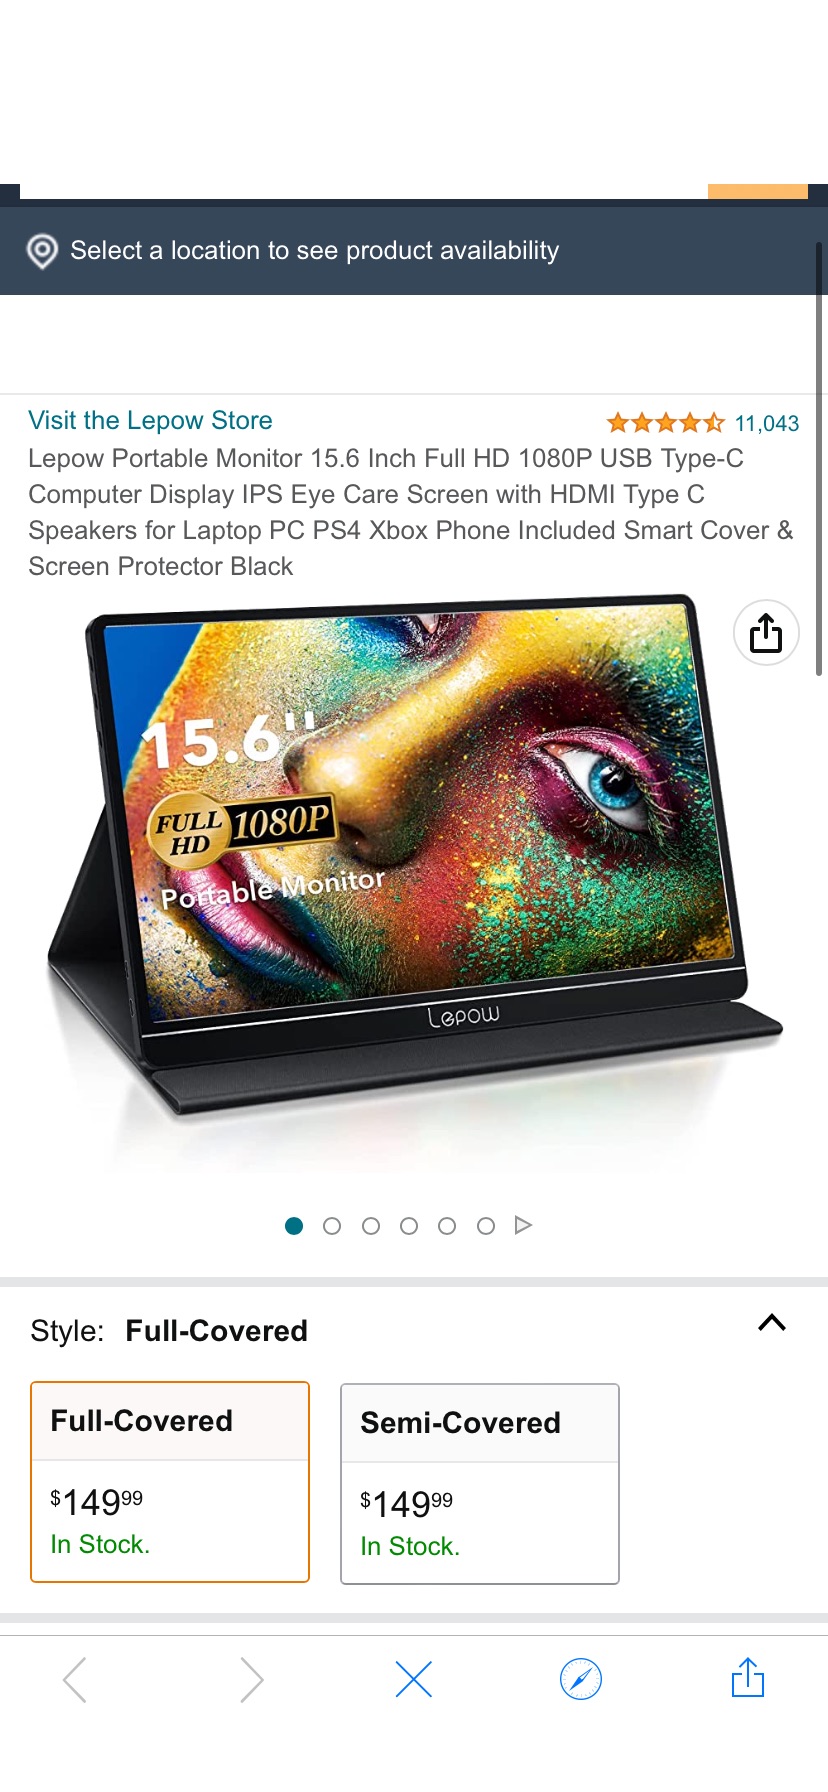 Amazon.com: Lepow Portable Monitor 15.6 Inch Full HD 1080P USB Type-C